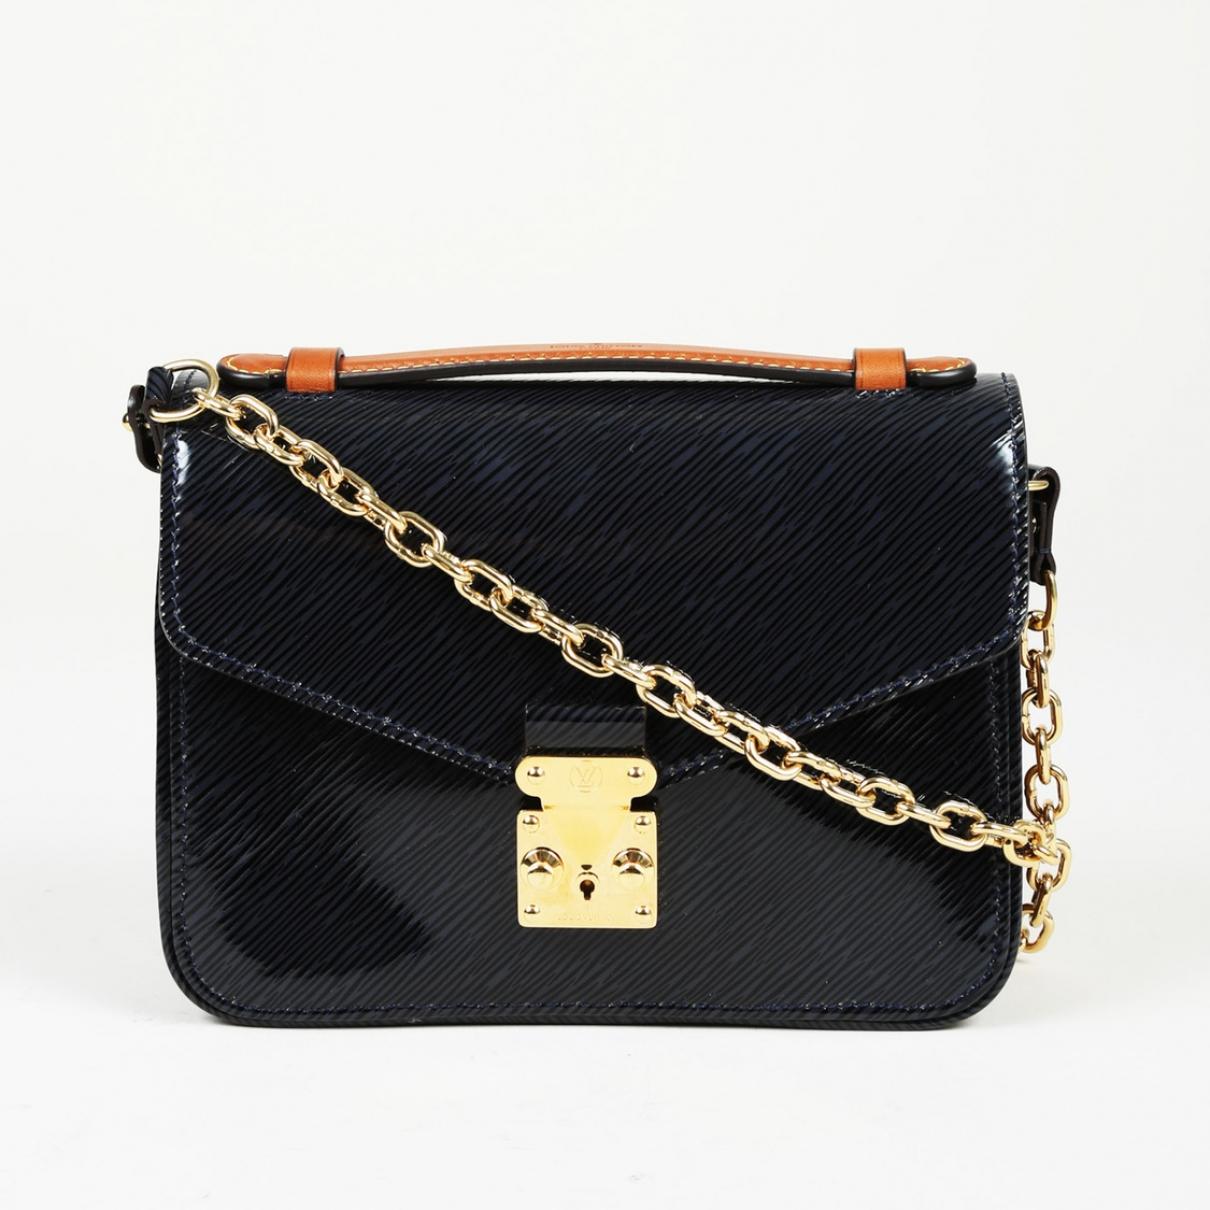 Louis Vuitton Metis Black Patent Leather Handbag in Black - Lyst